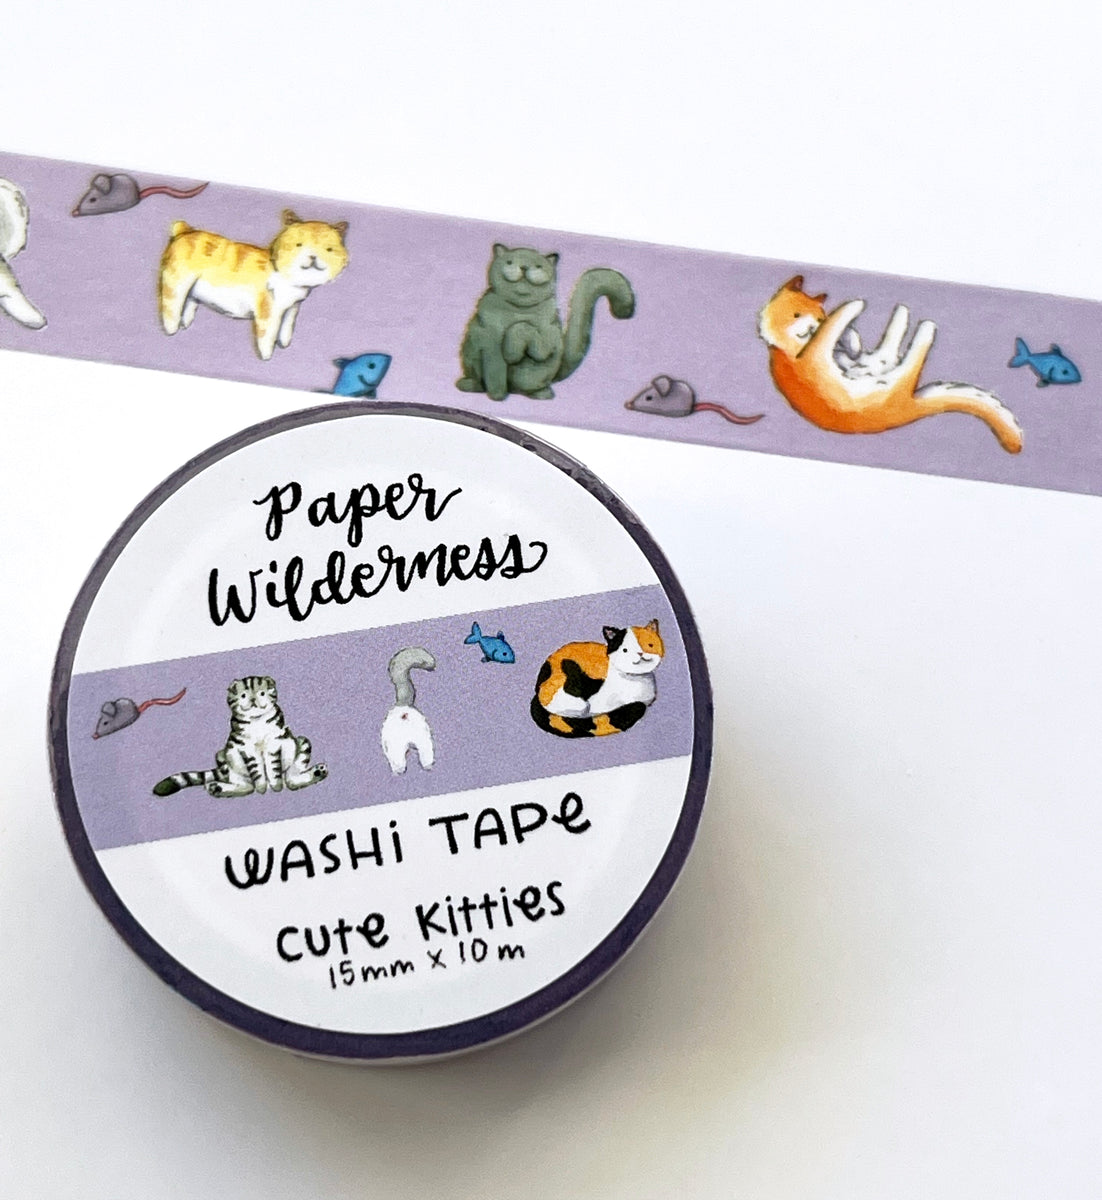 Cute Kitties 15mm Washi Tape – Paper Wilderness